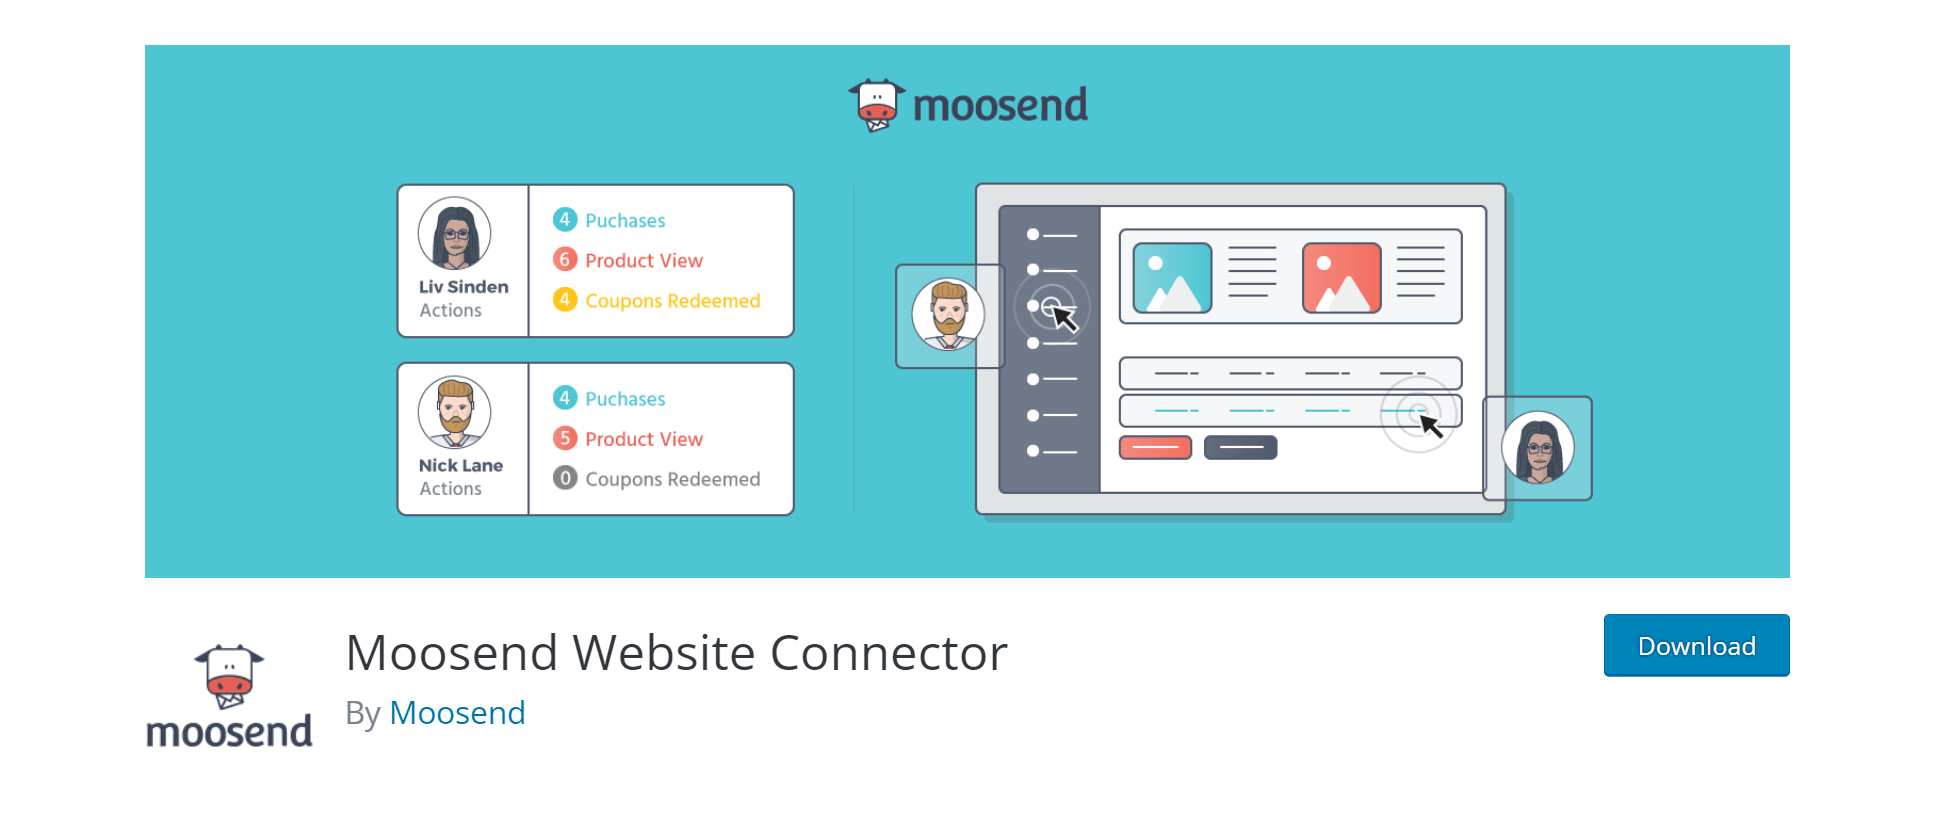 Moosend website connector for WordPress